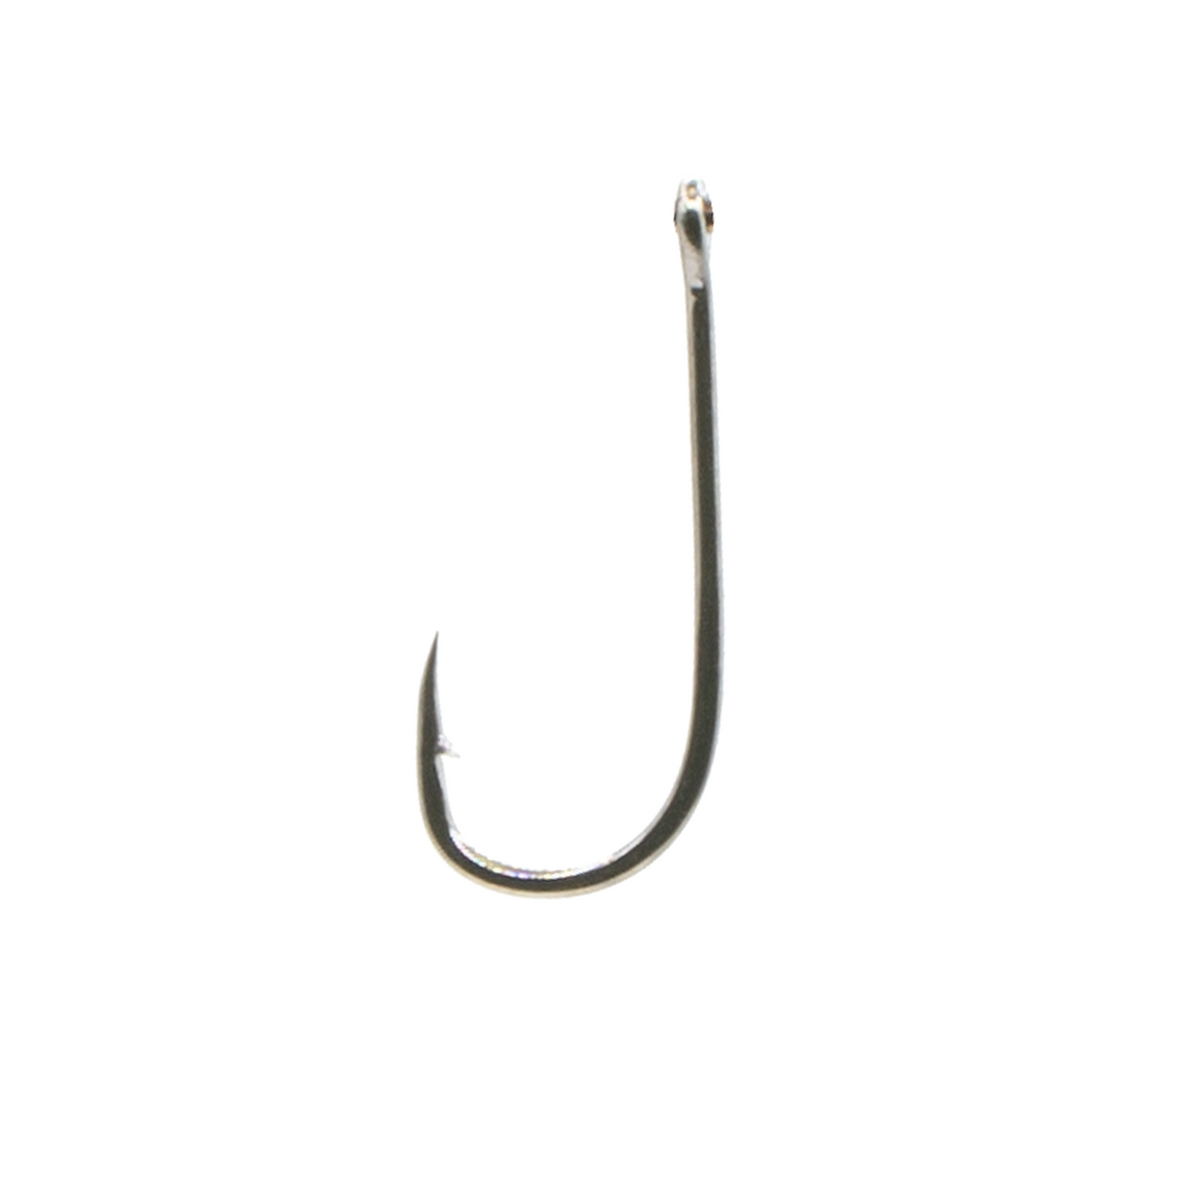 Terminal Tackle - Bluegill and Sunfish Hook - 6th Sense Fishing Hooks